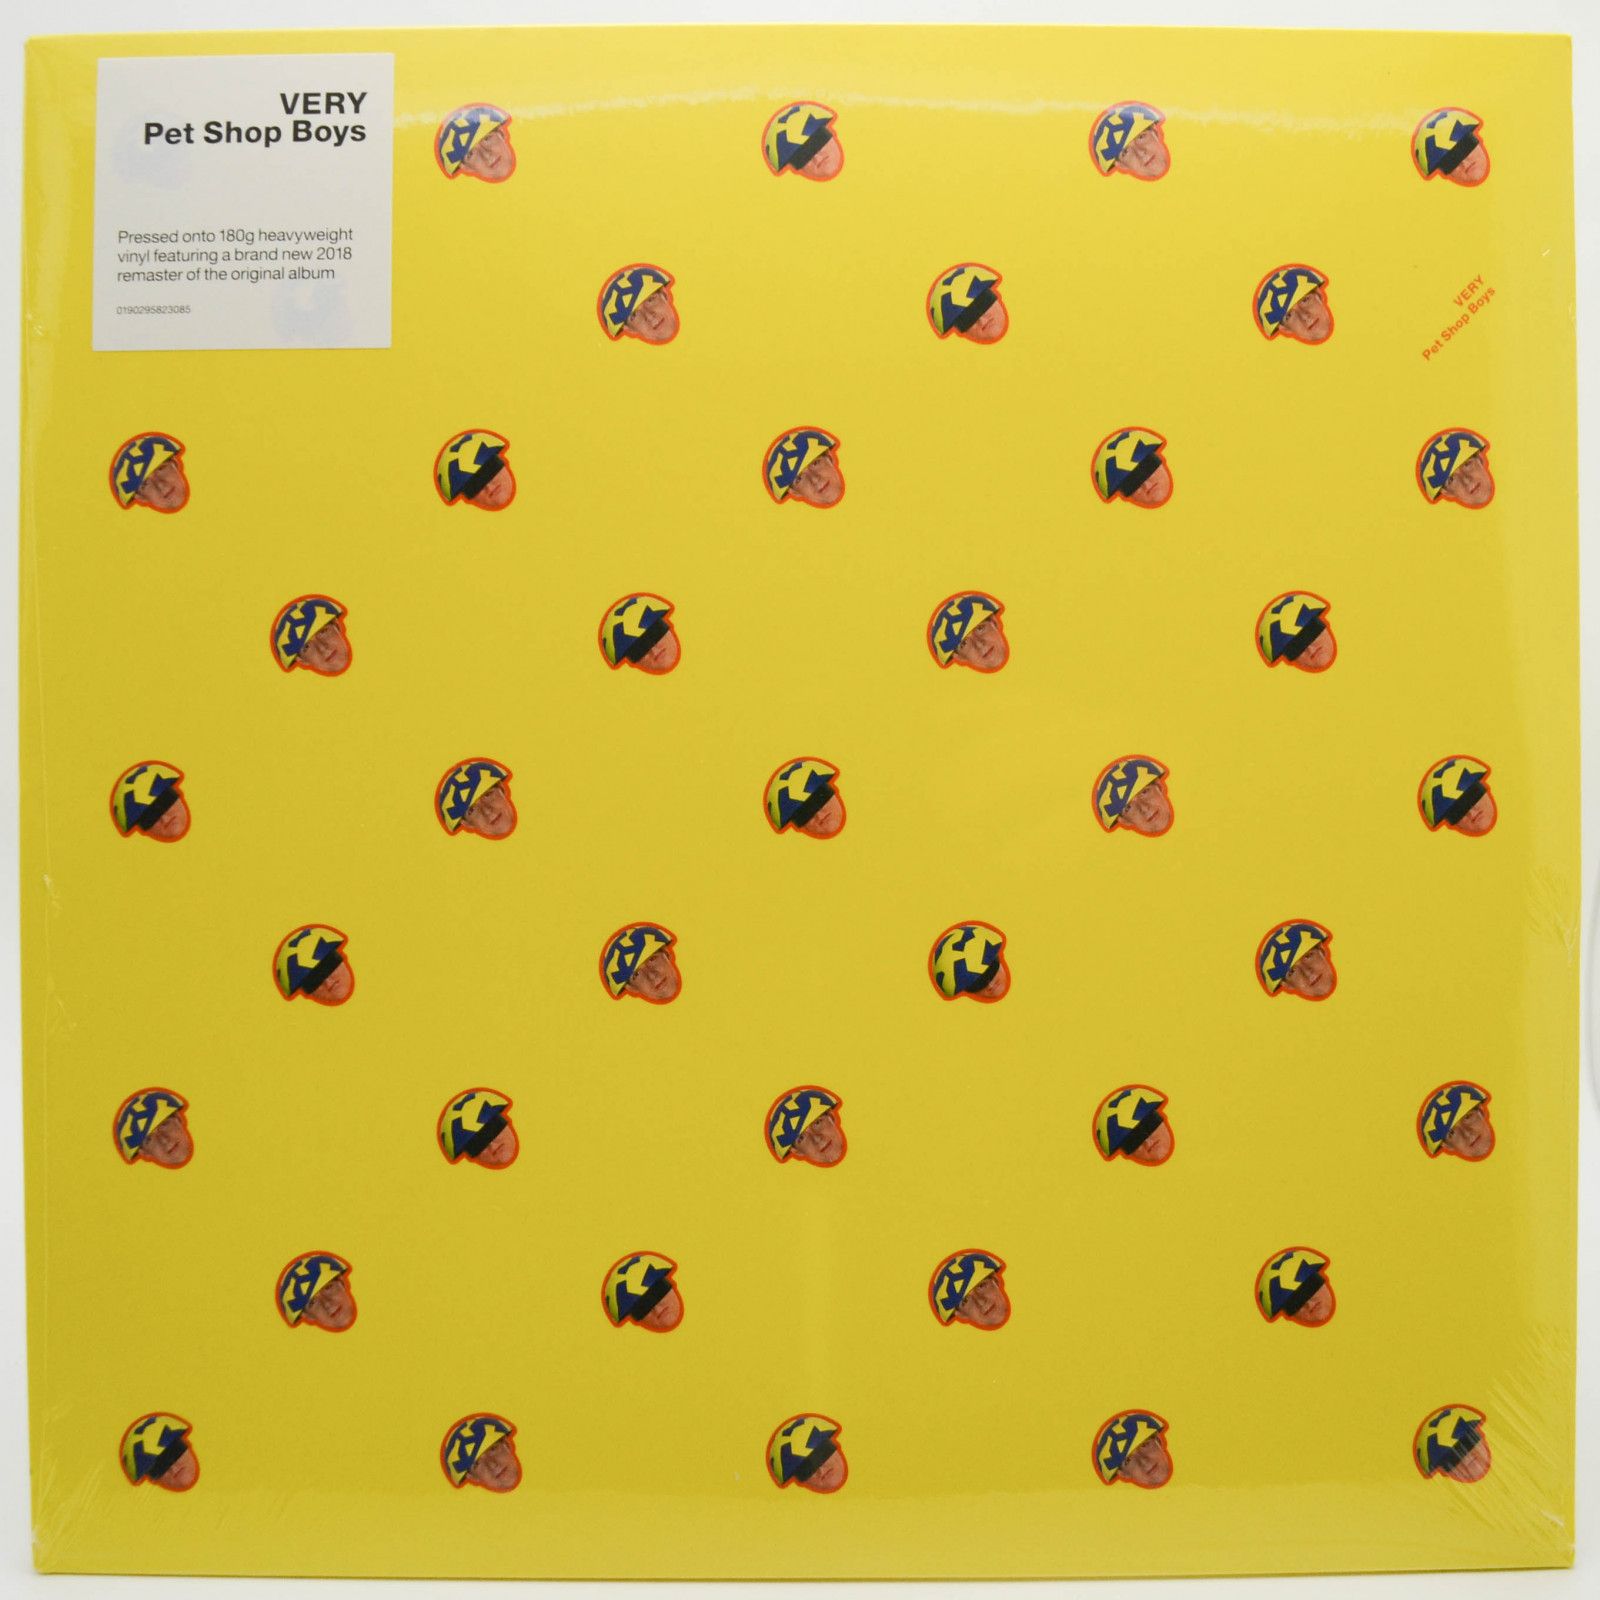 Pet Shop Boys — Very, 1993